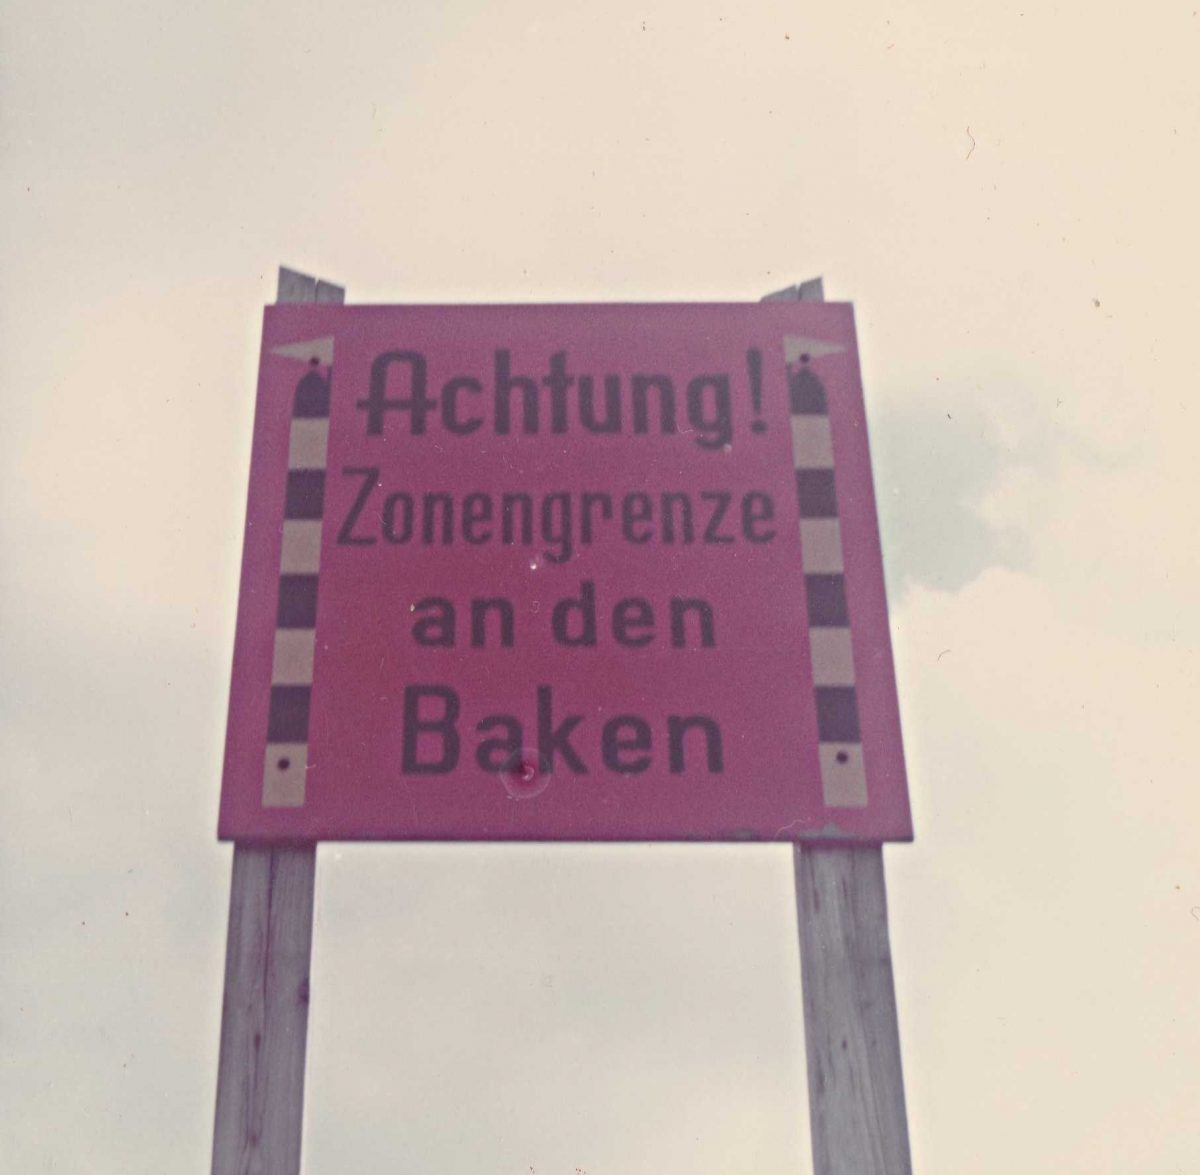 Visiting the inner German border in 1972